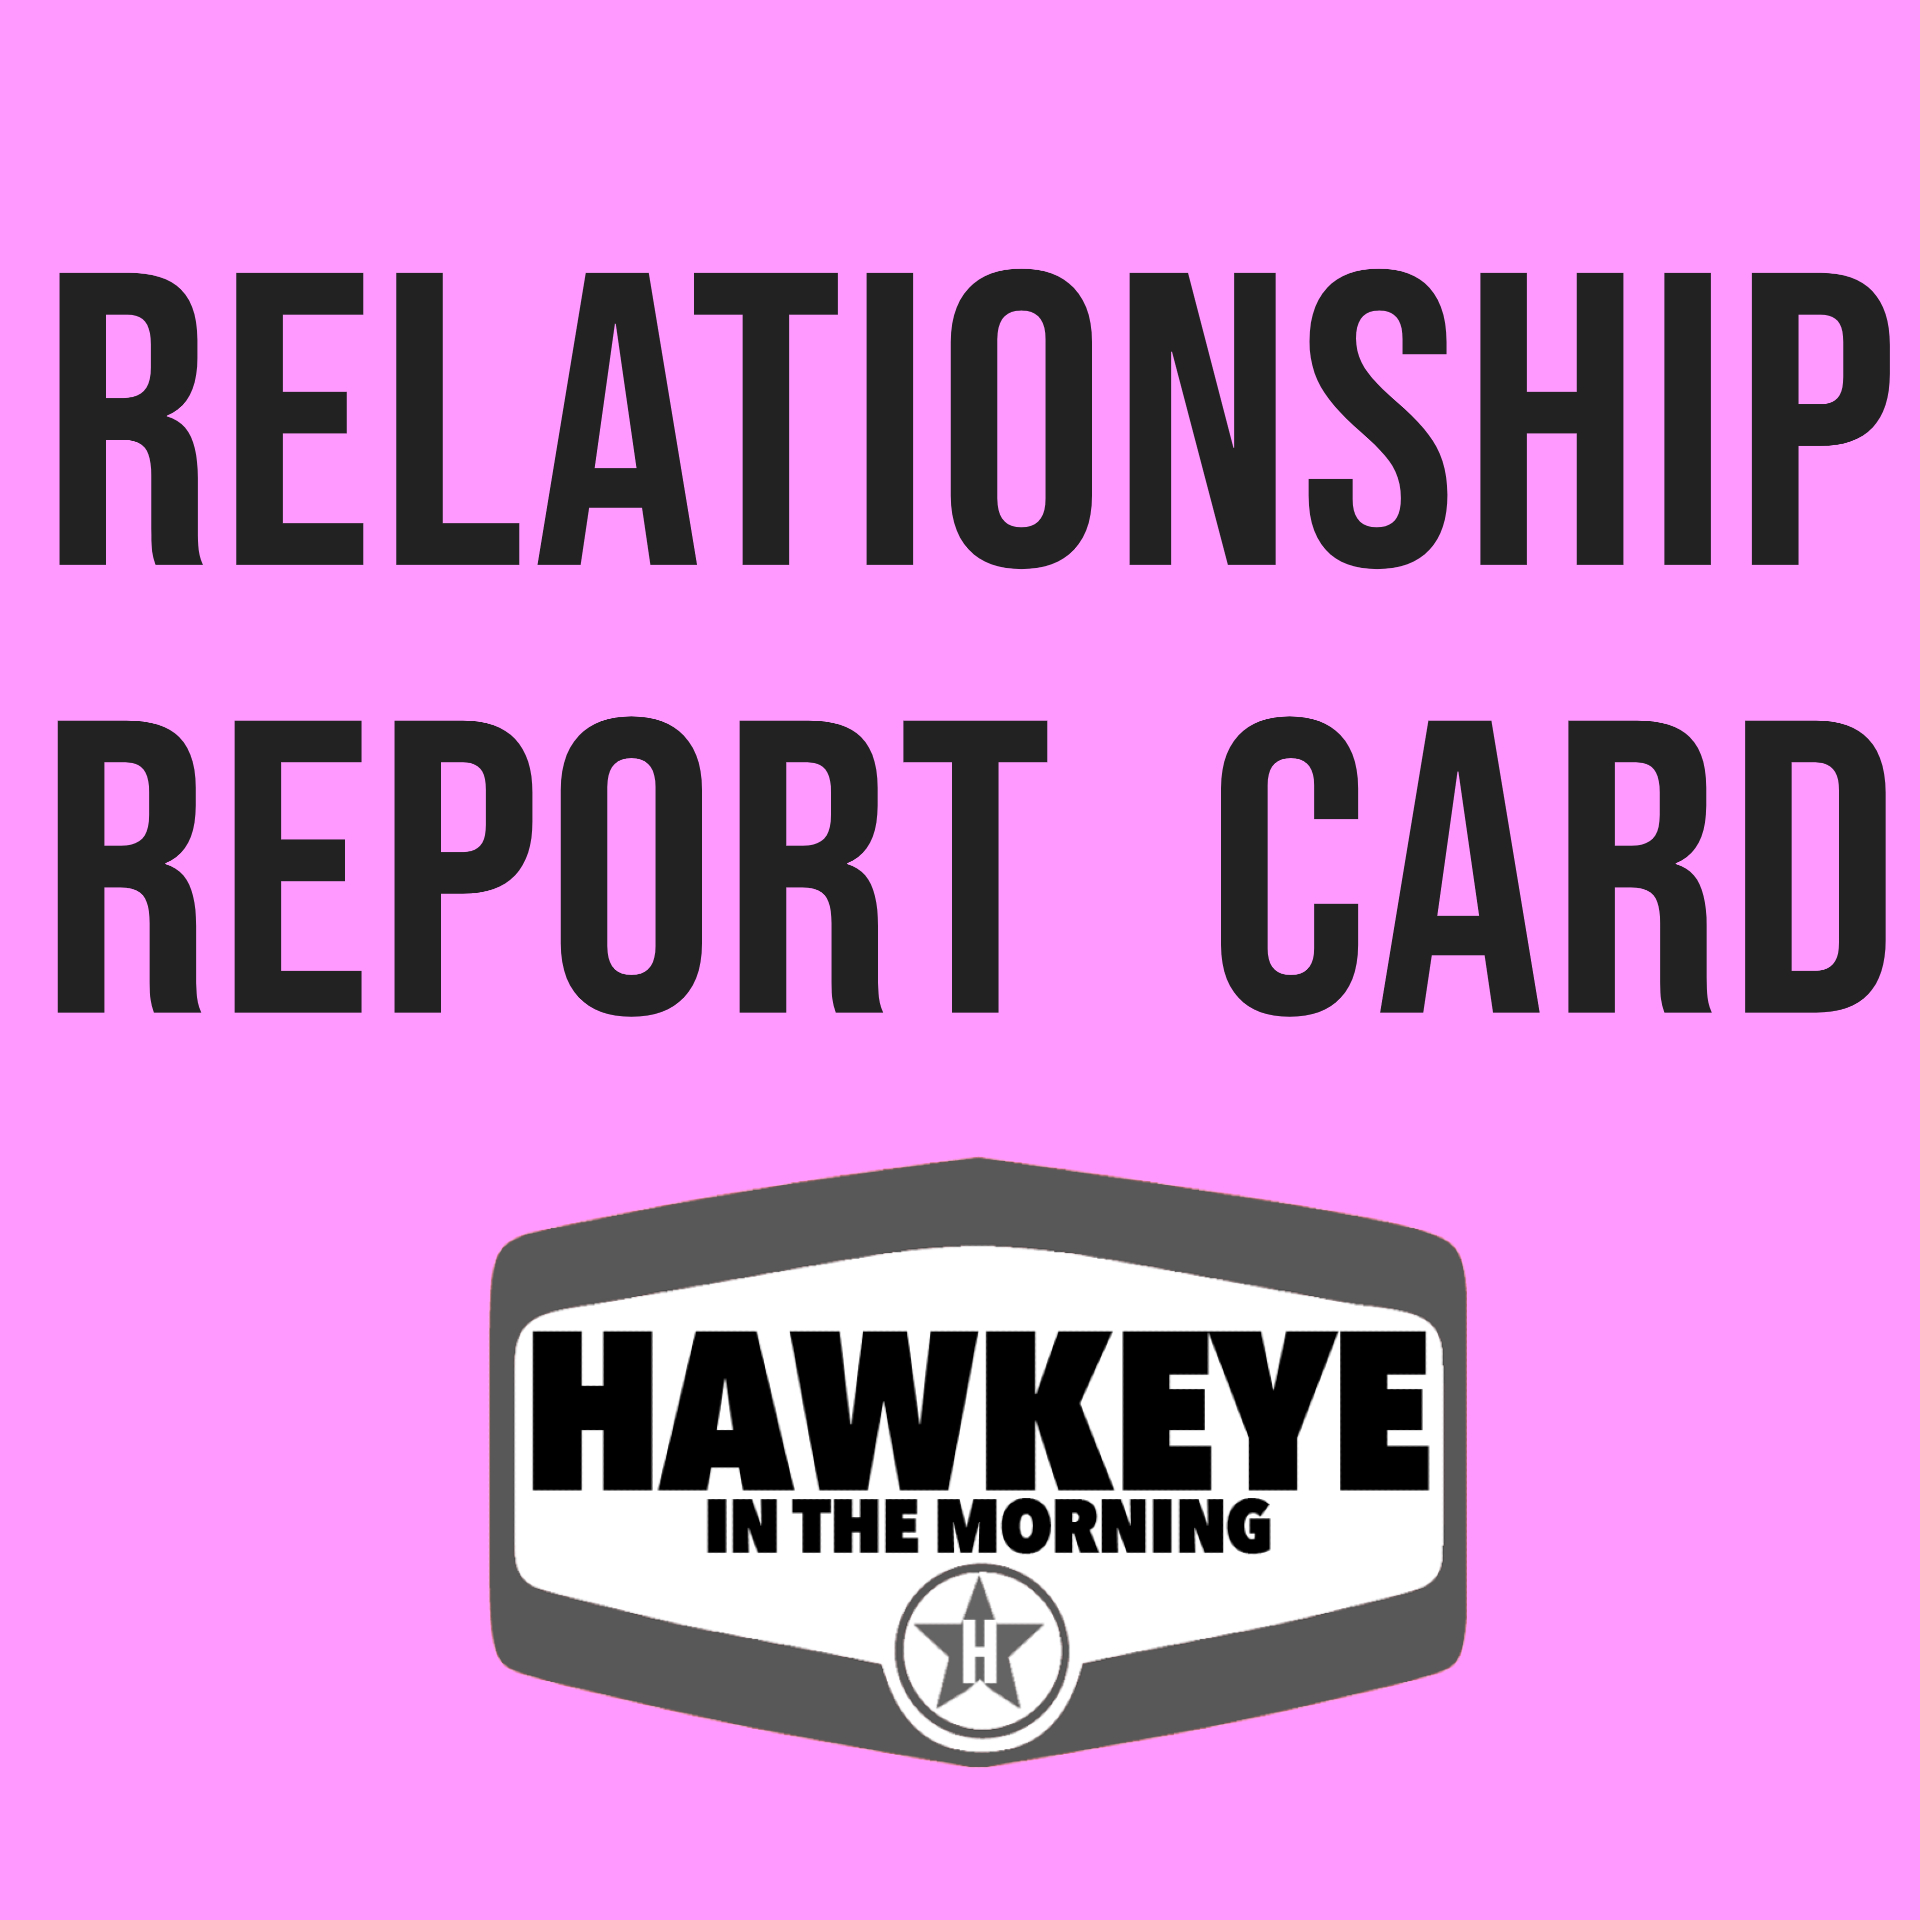 Hawkeye's Relationship Report Card - Lost on Their Sledding Trip